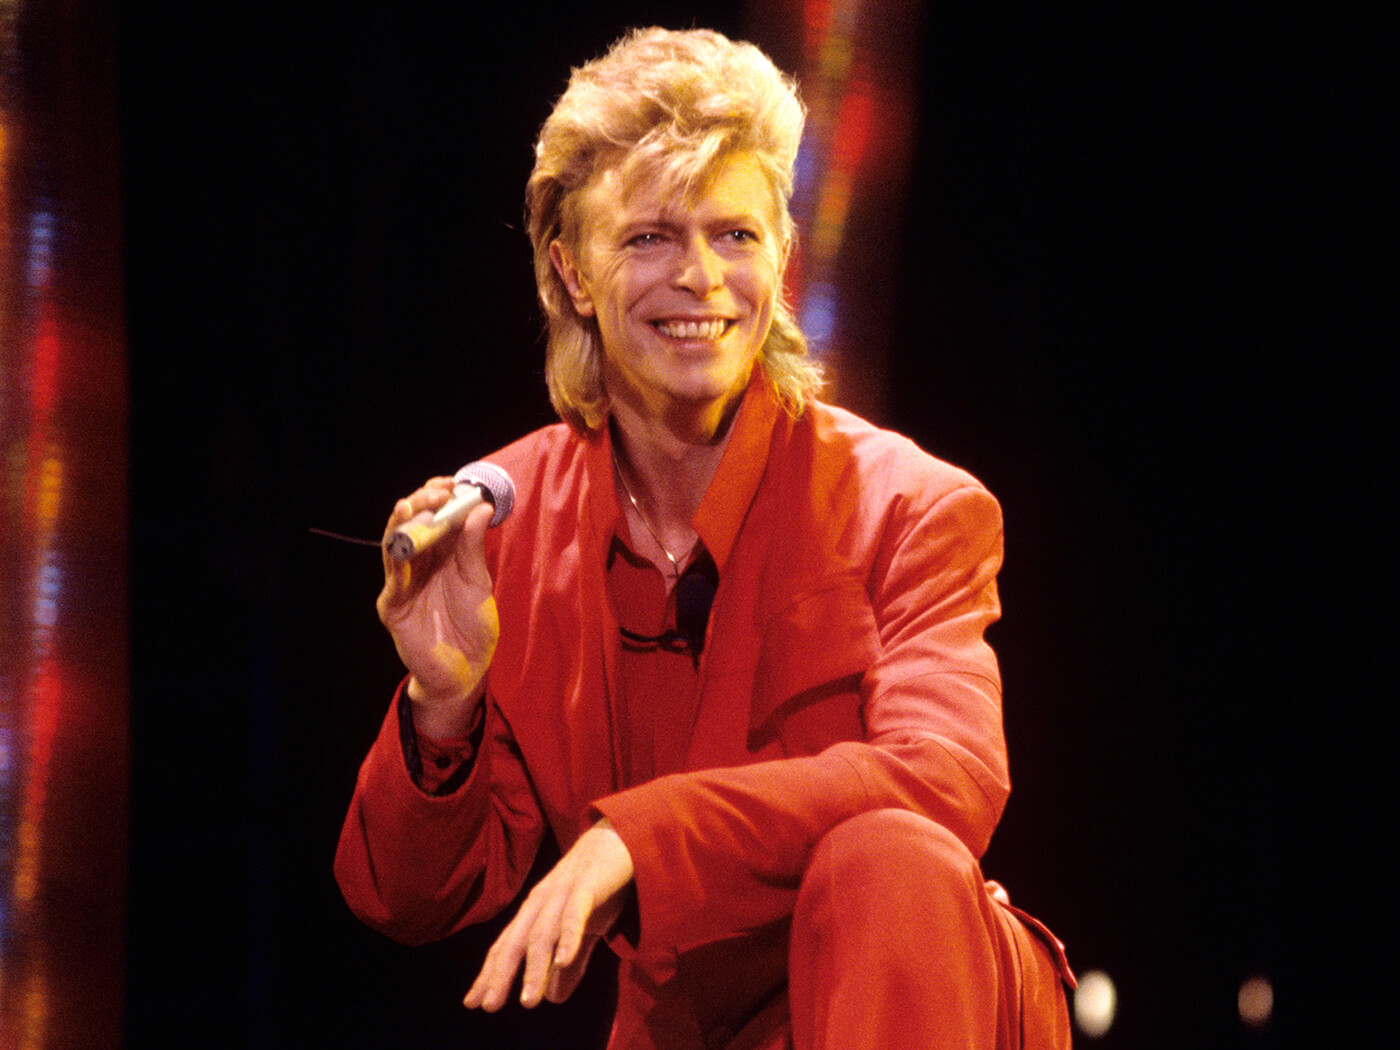 David Bowie performing in 1987. Credit: Ebet Roberts/Redferns